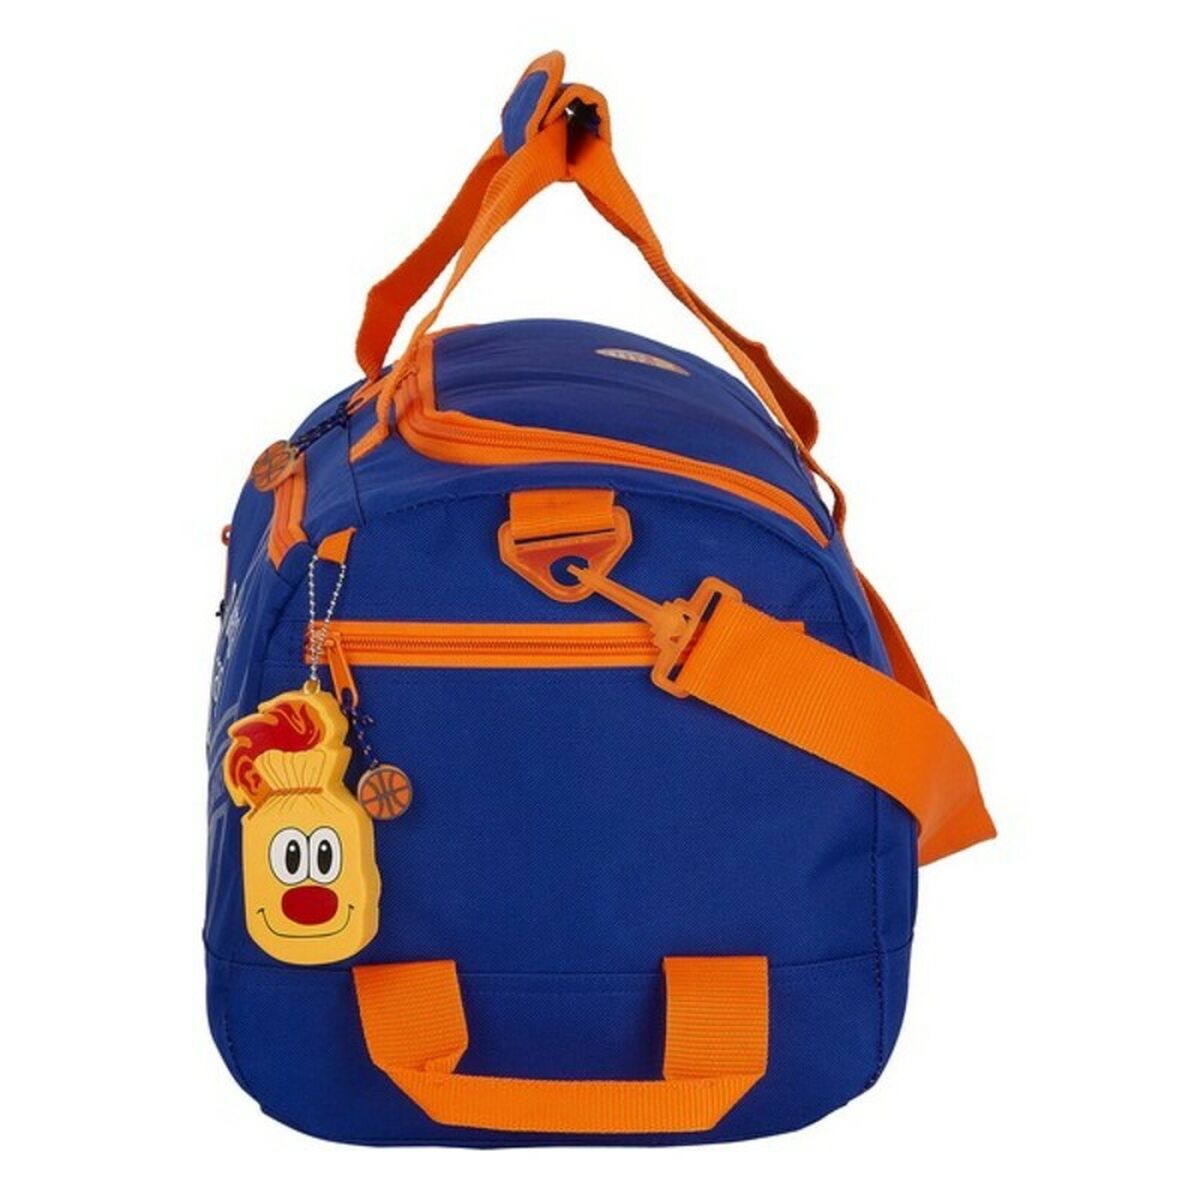 Sports bag Valencia Basket Blue Orange (50 x 25 x 25 cm)